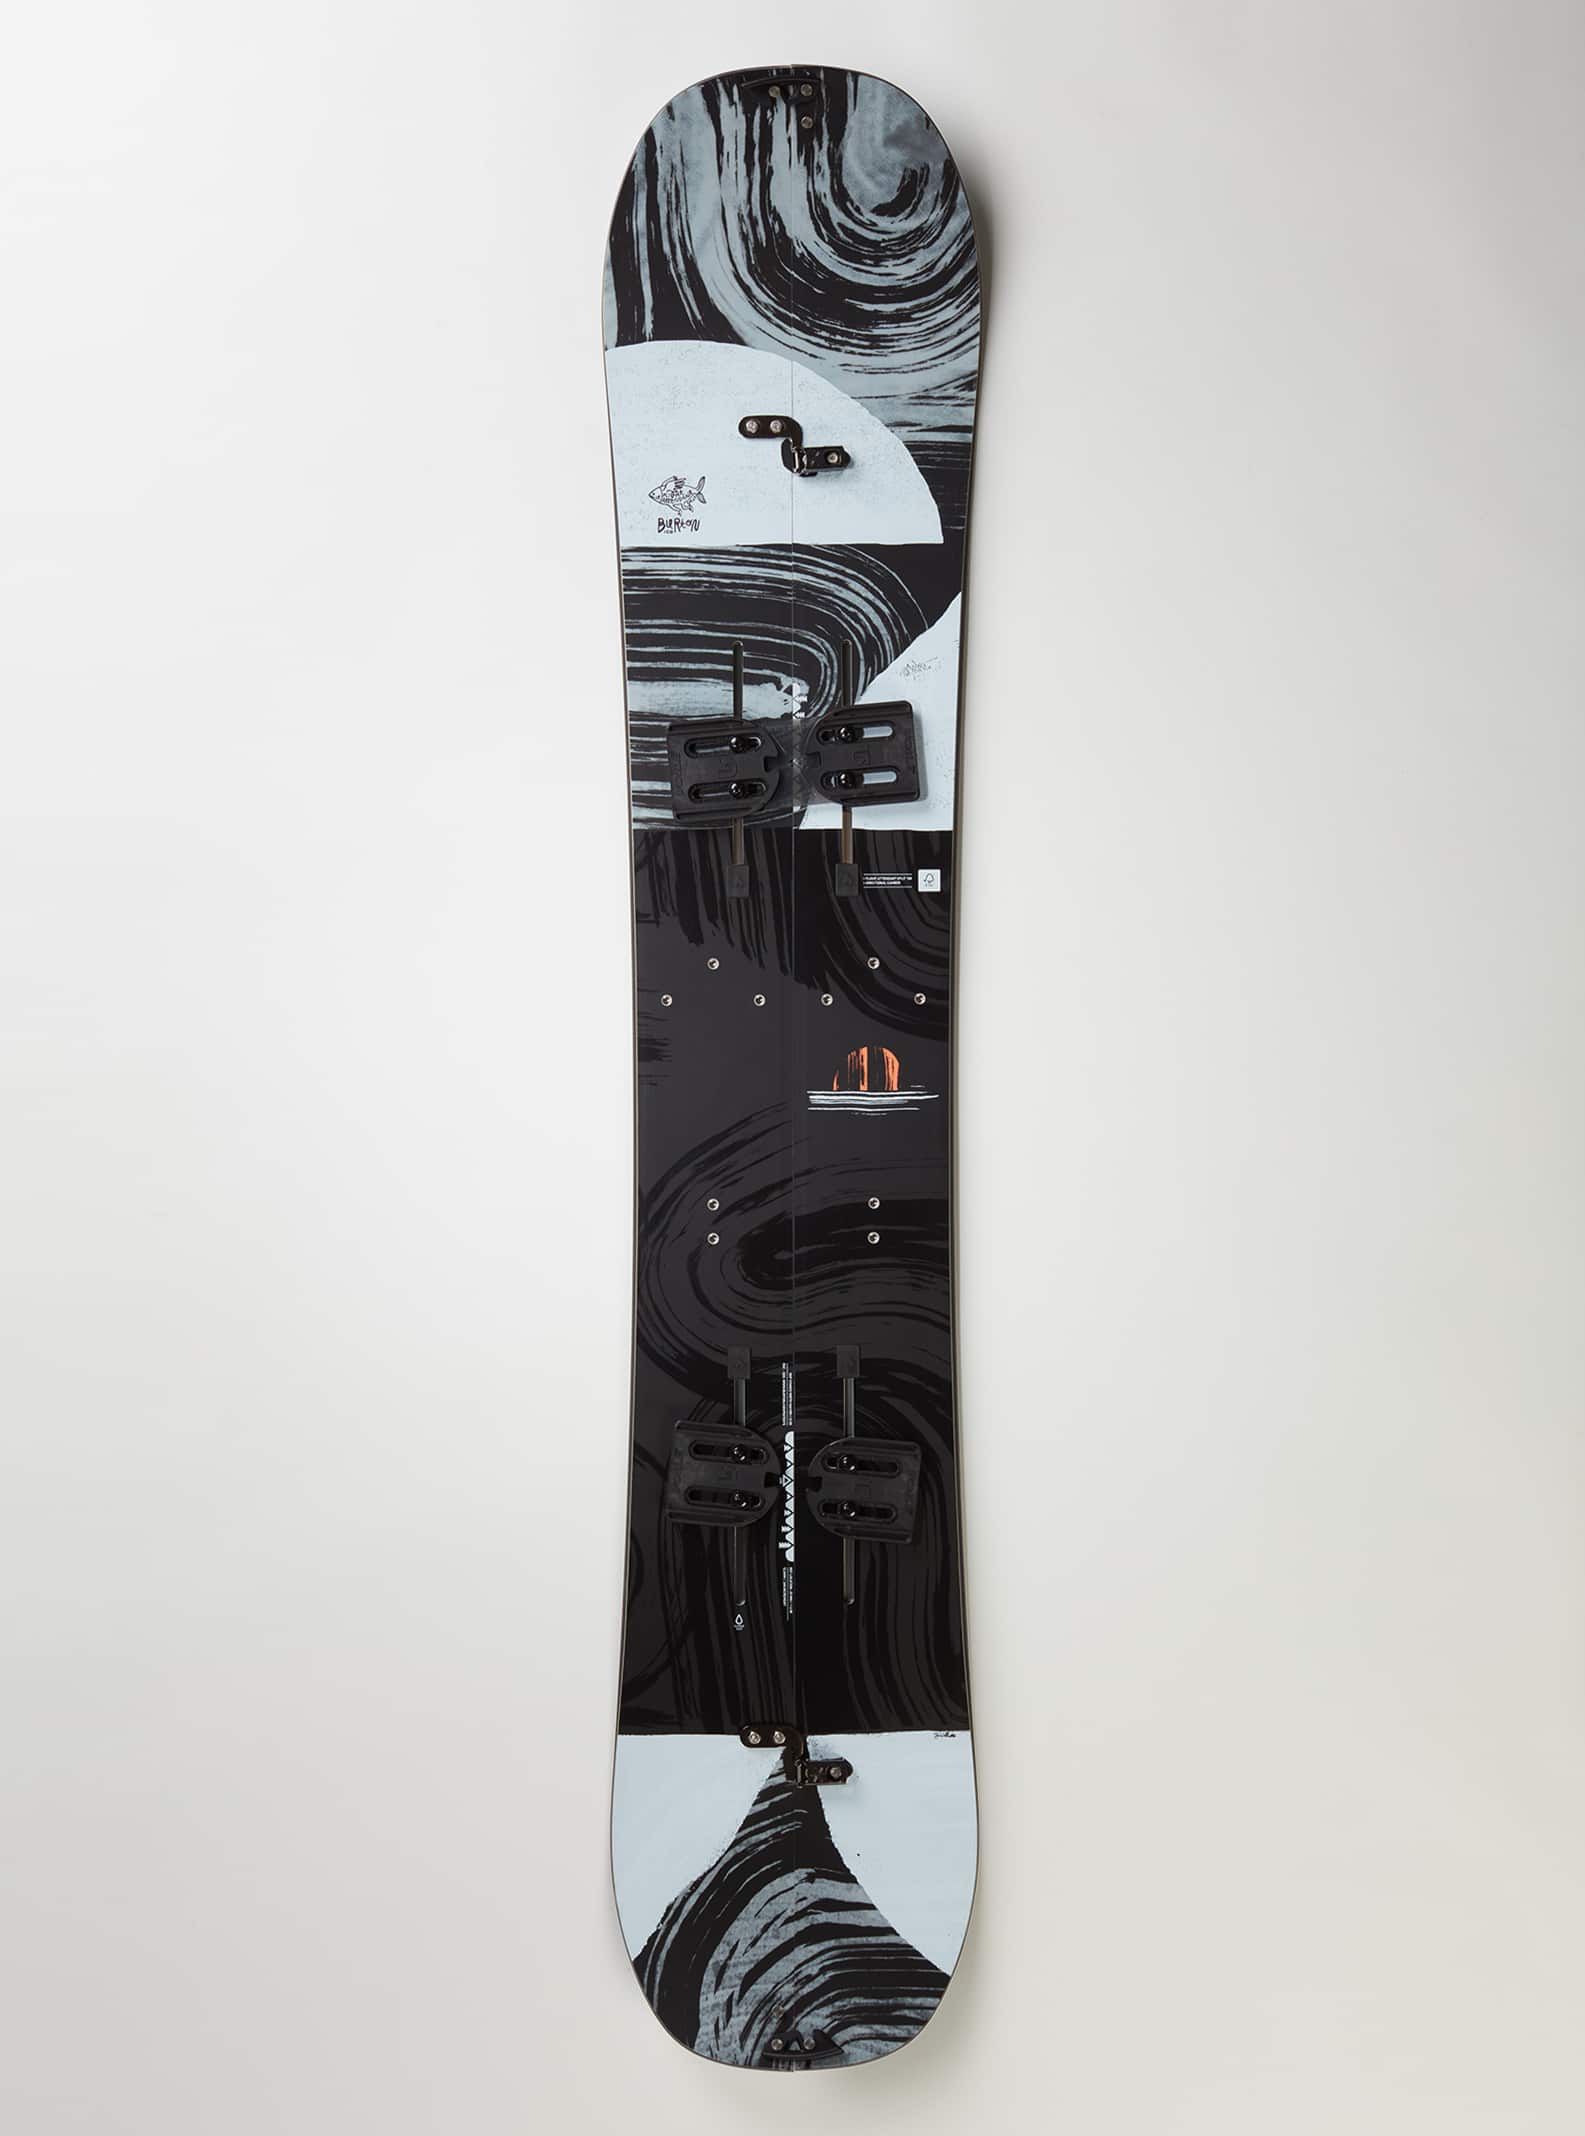 Men's and Women's Splitboarding Collection | Burton Snowboards US